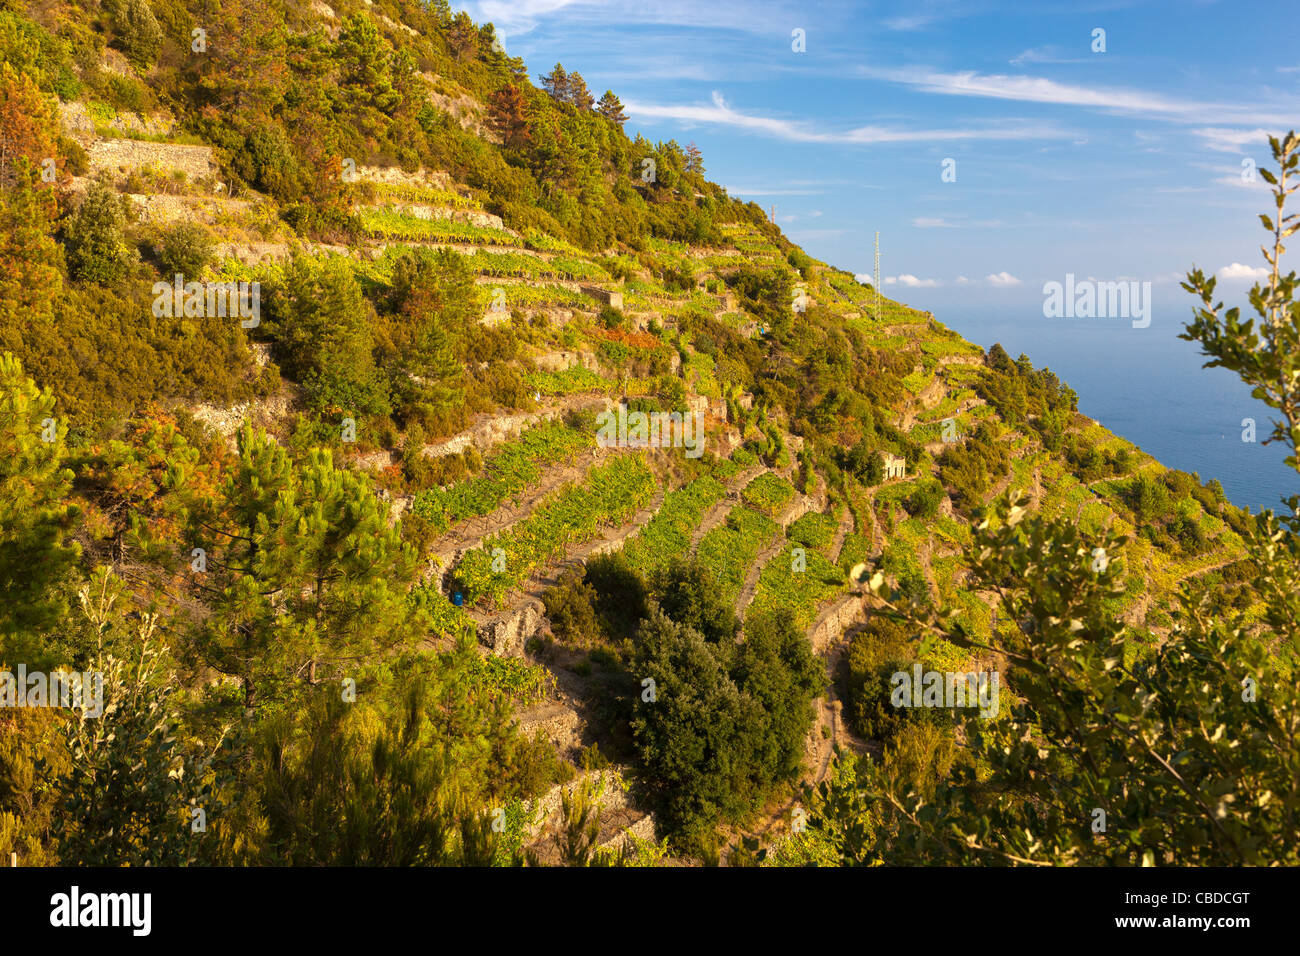 Terraced vineyards, Volastra, Province of La Spezia, Liguria, Italy, Europe Stock Photo